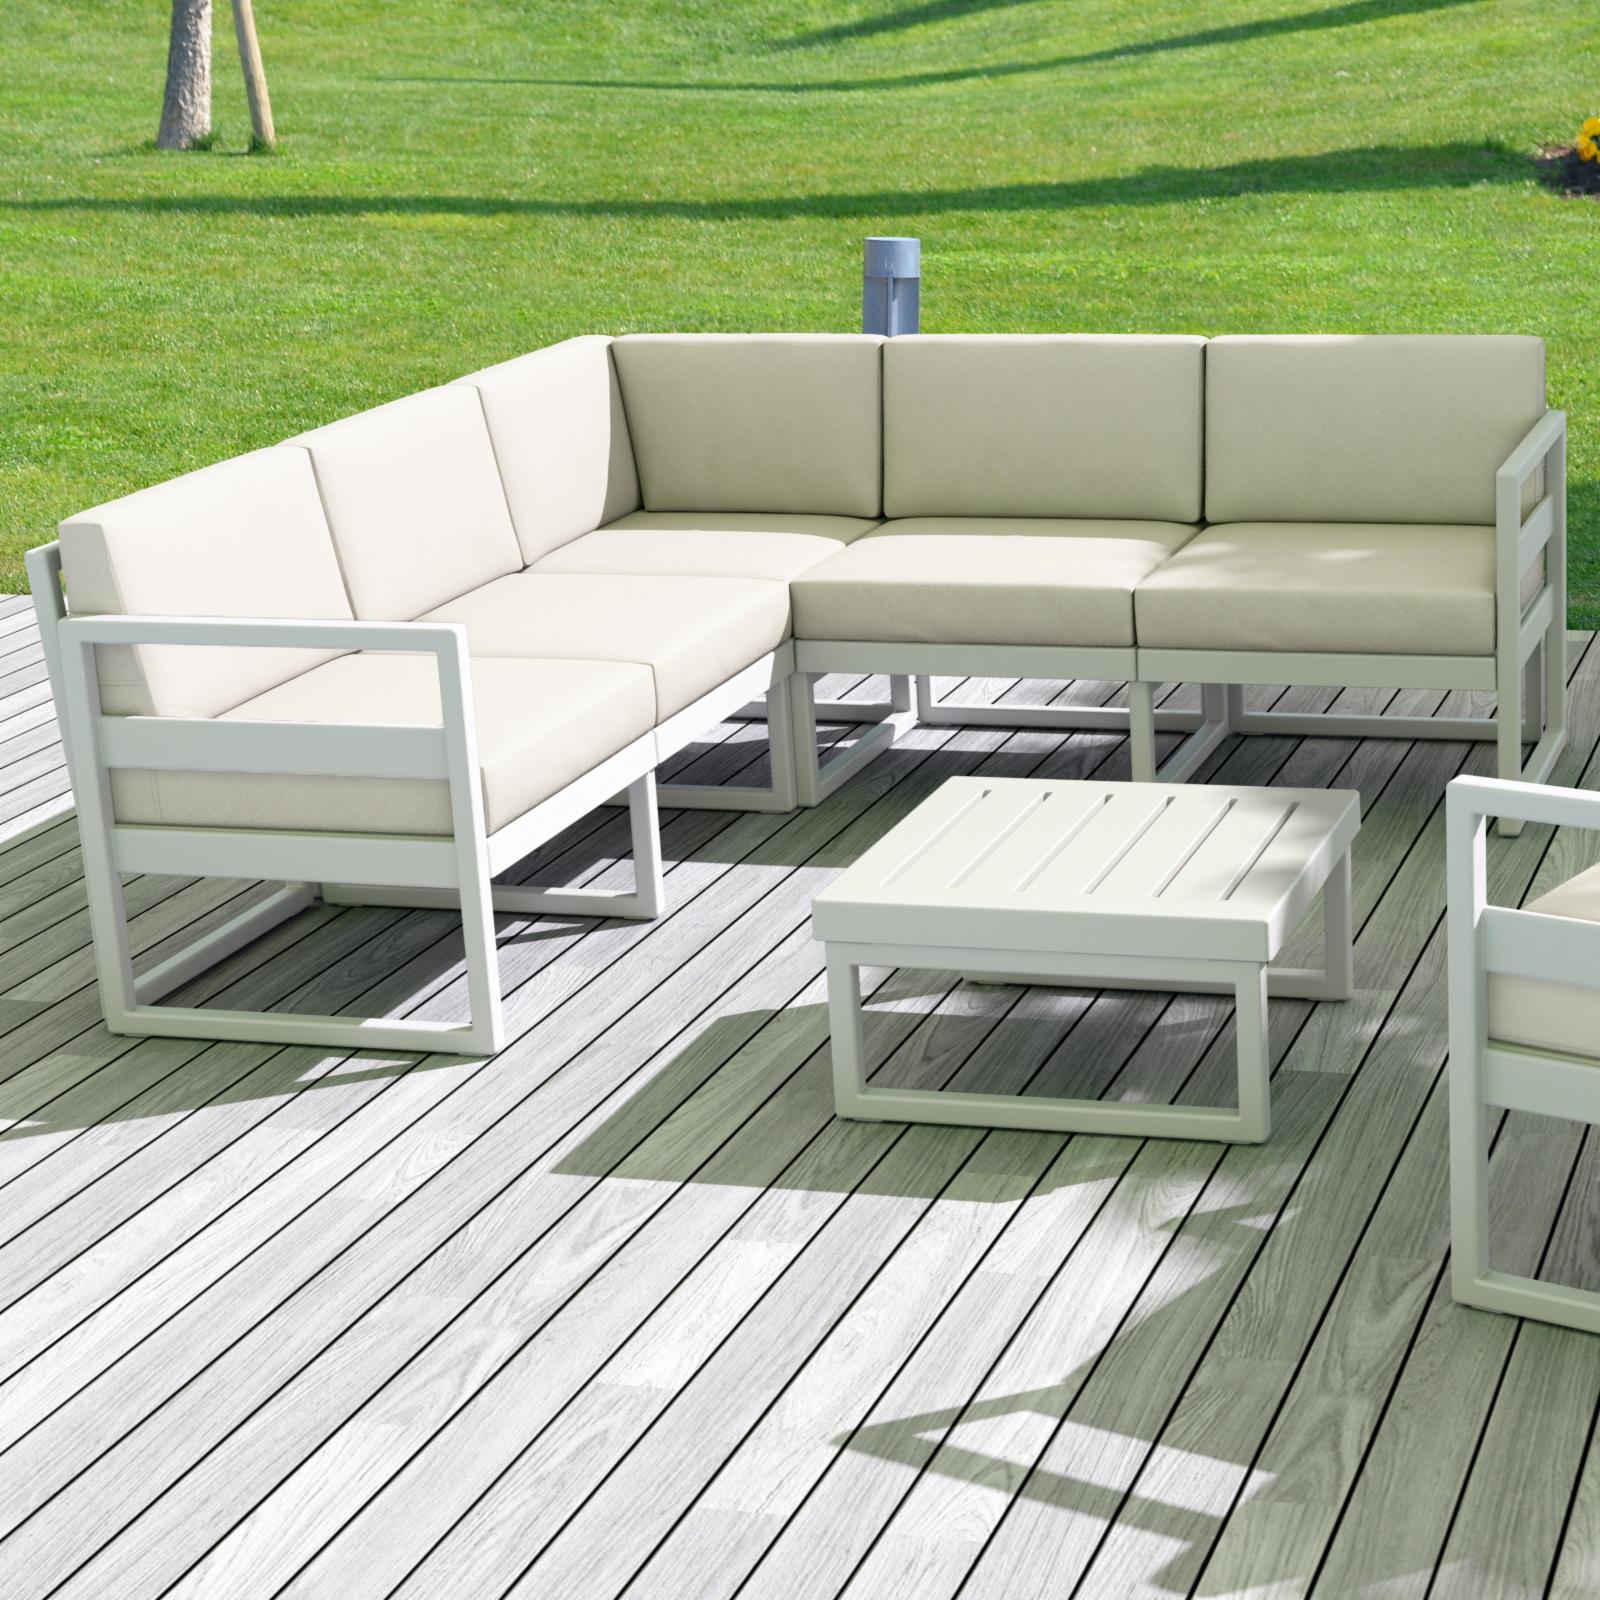 Mykonos Corner Sectional Lounge Set White with Acrylic Fabric Charcoal Cushions - image 5 of 8